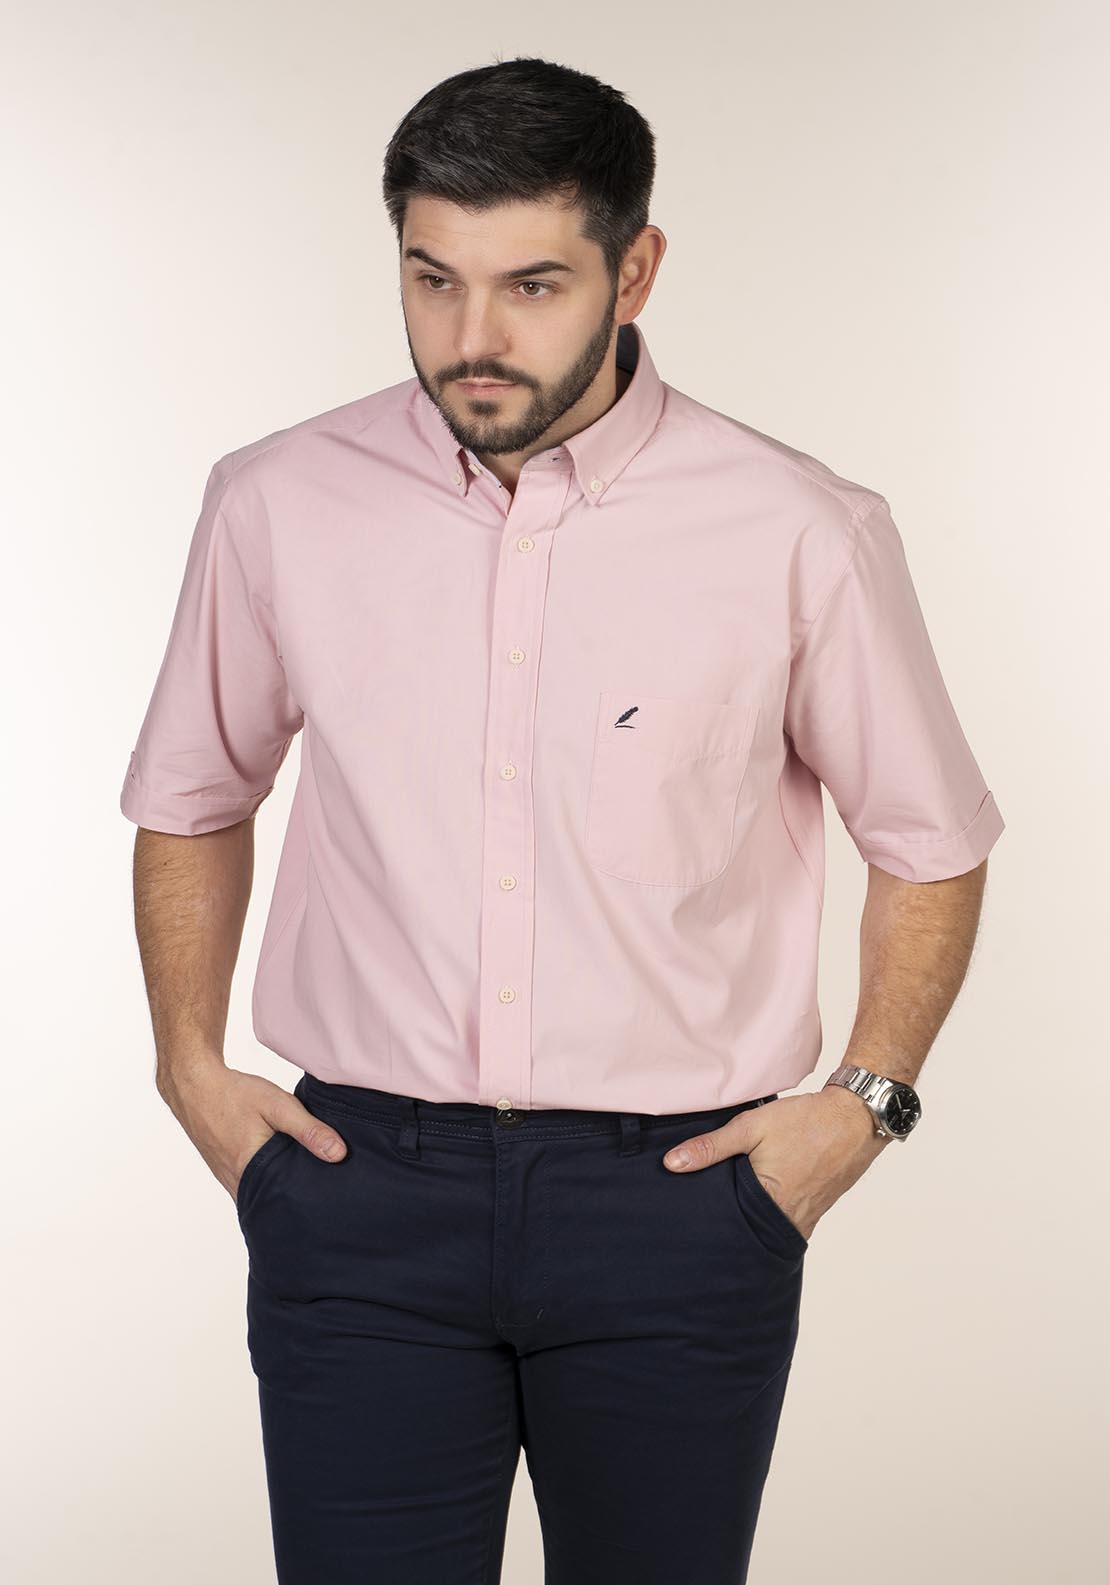 Yeats Casual Plain Short Sleeve Shirt - Pink 1 Shaws Department Stores